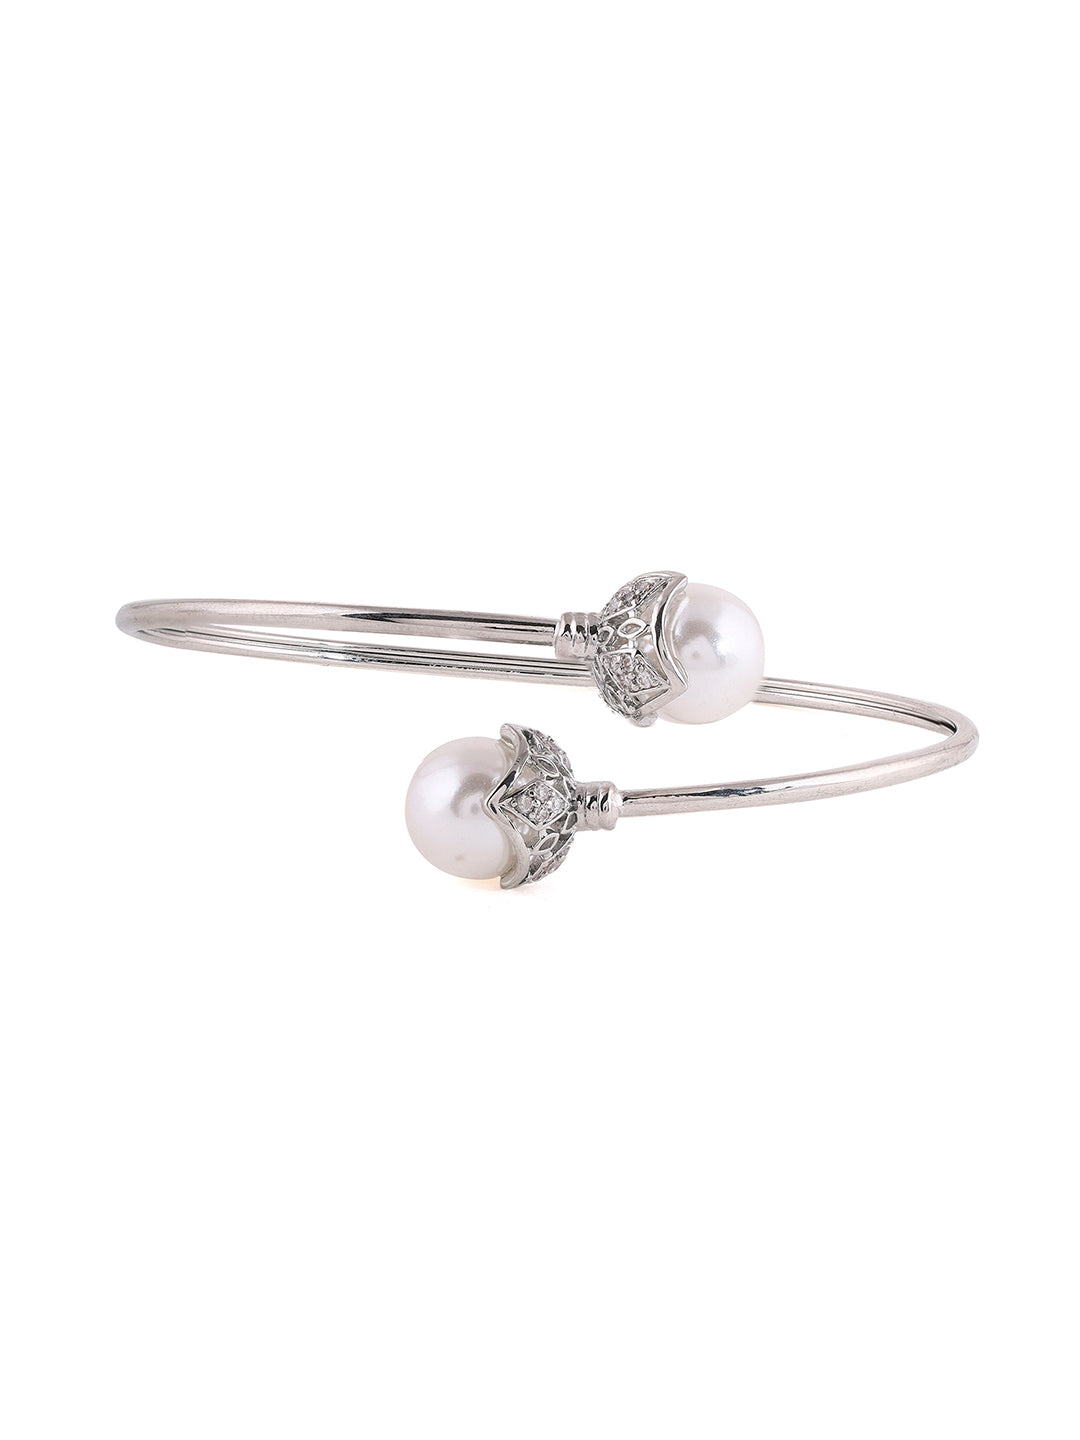 Prita Floral Pearl Silver Bracelet